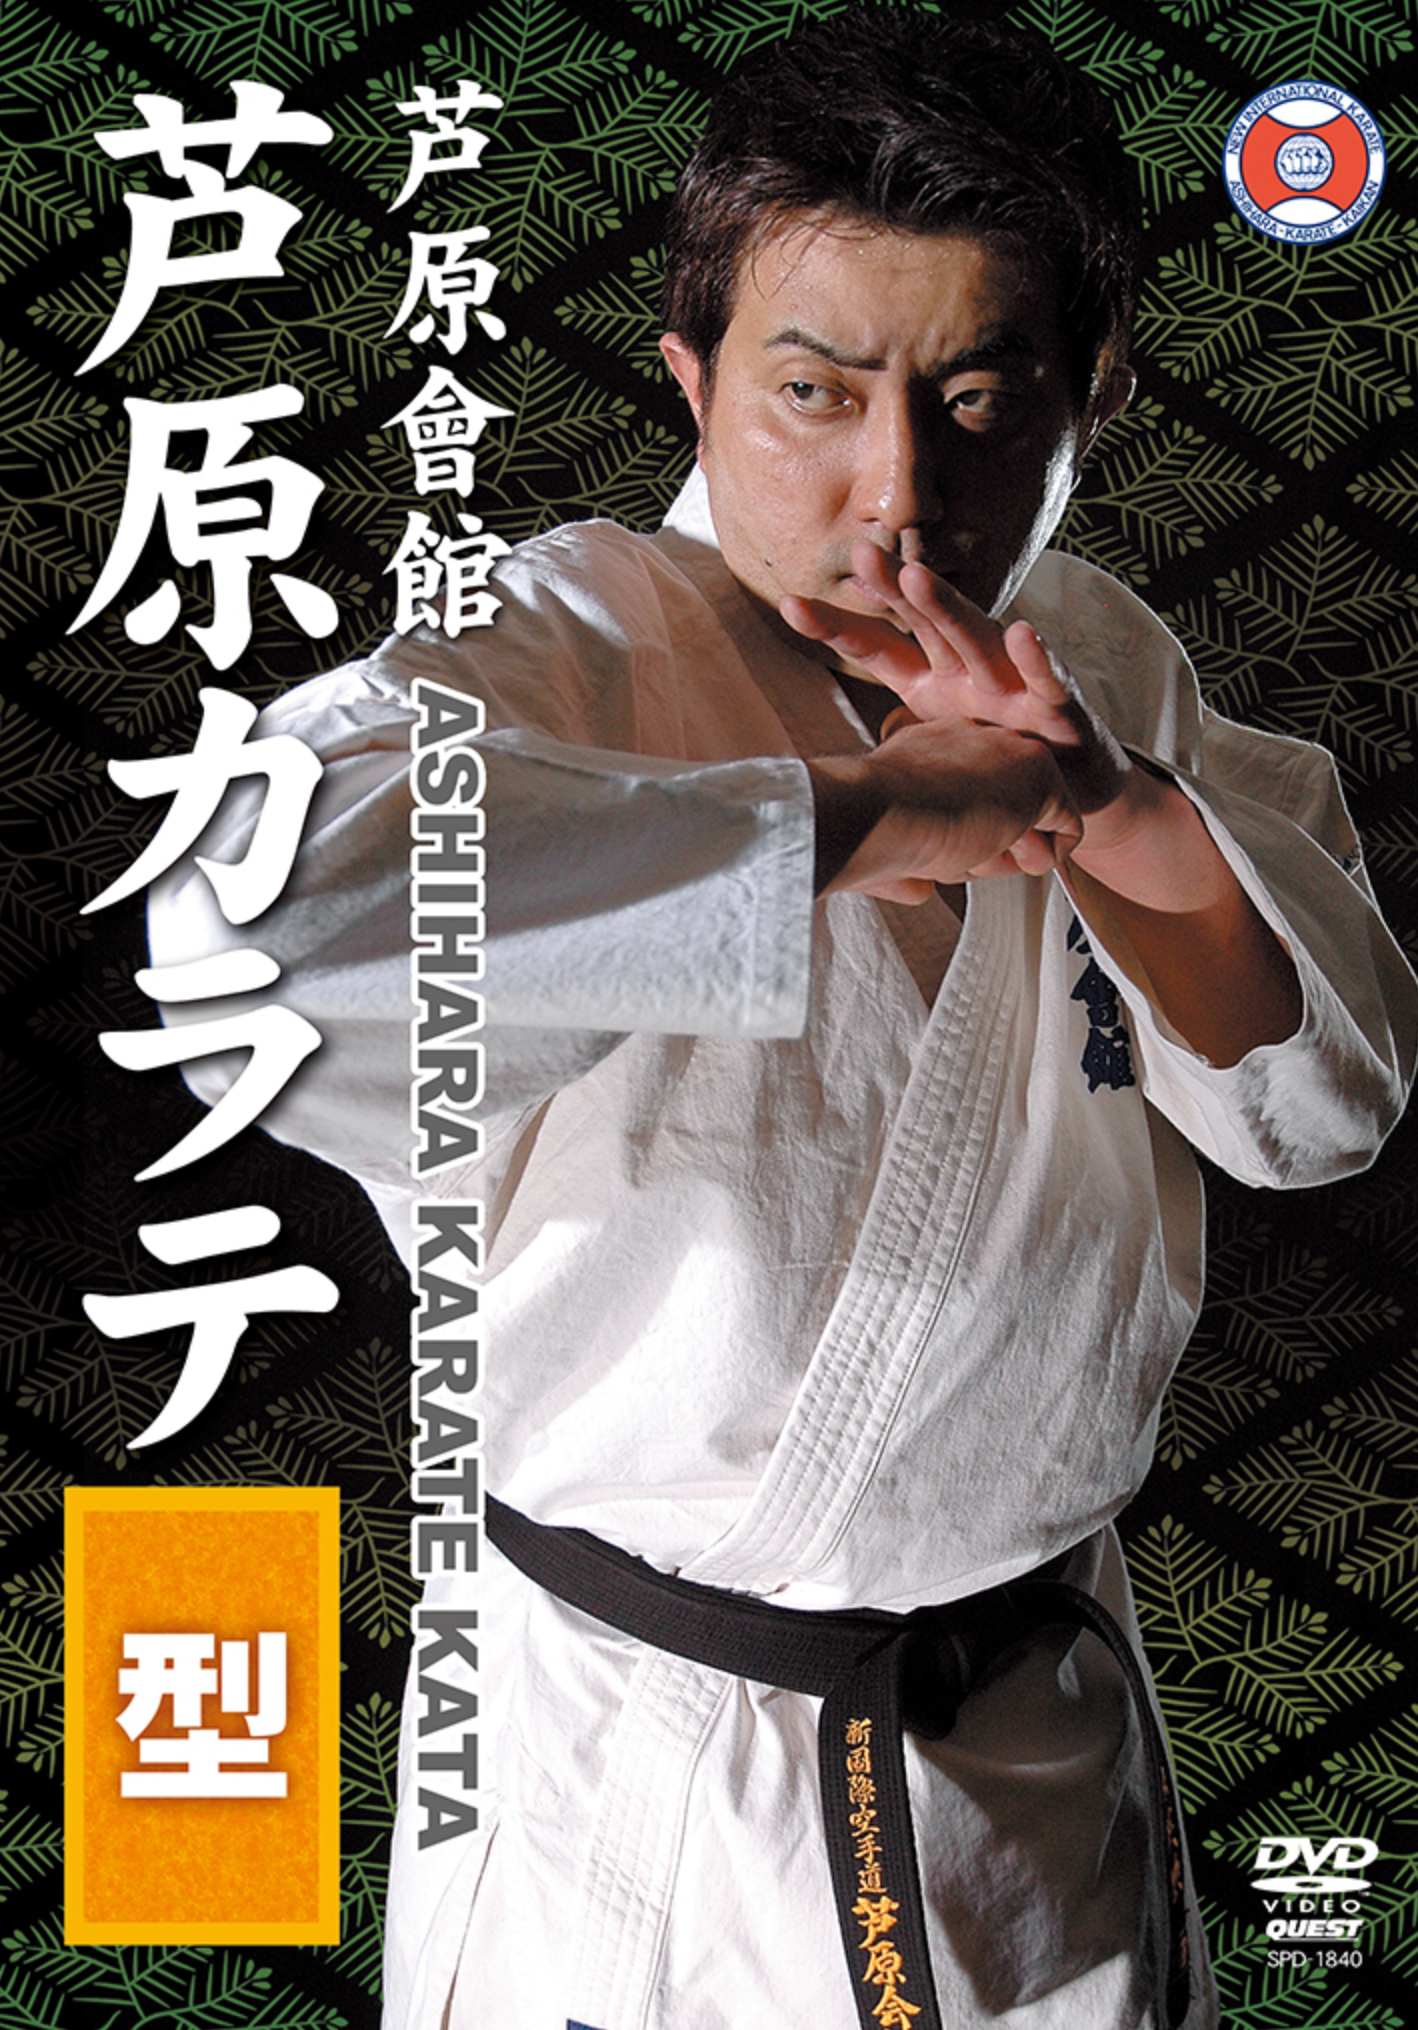 Ashihara Karate Kata DVD by Hidenori Ashihara - Budovideos Inc